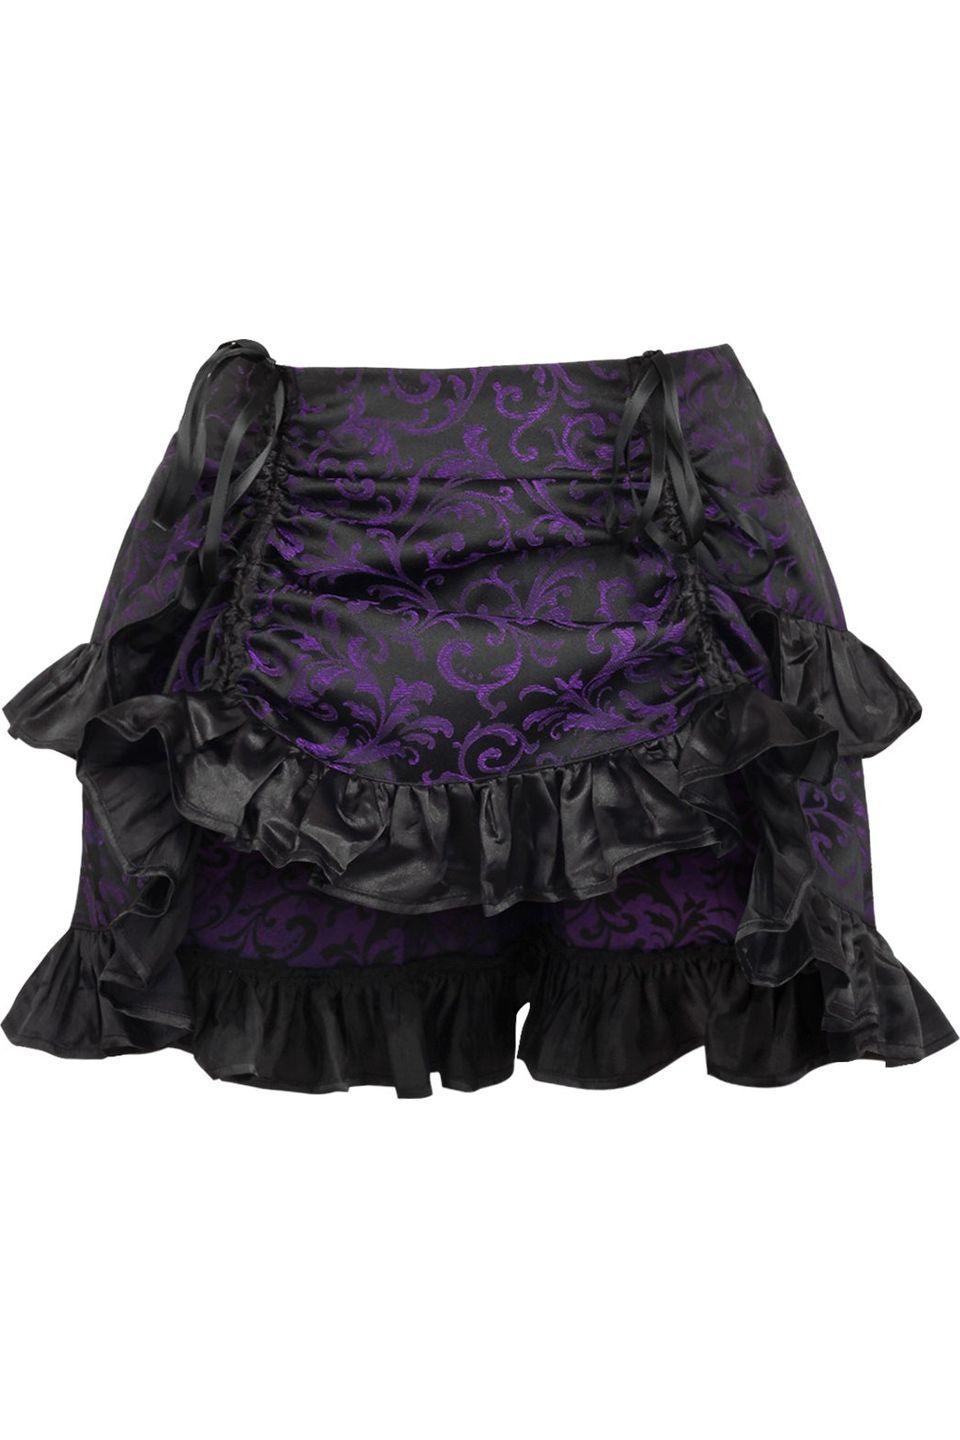 Purple/Black Brocade Ruched Bustle Skirt - AMIClubwear